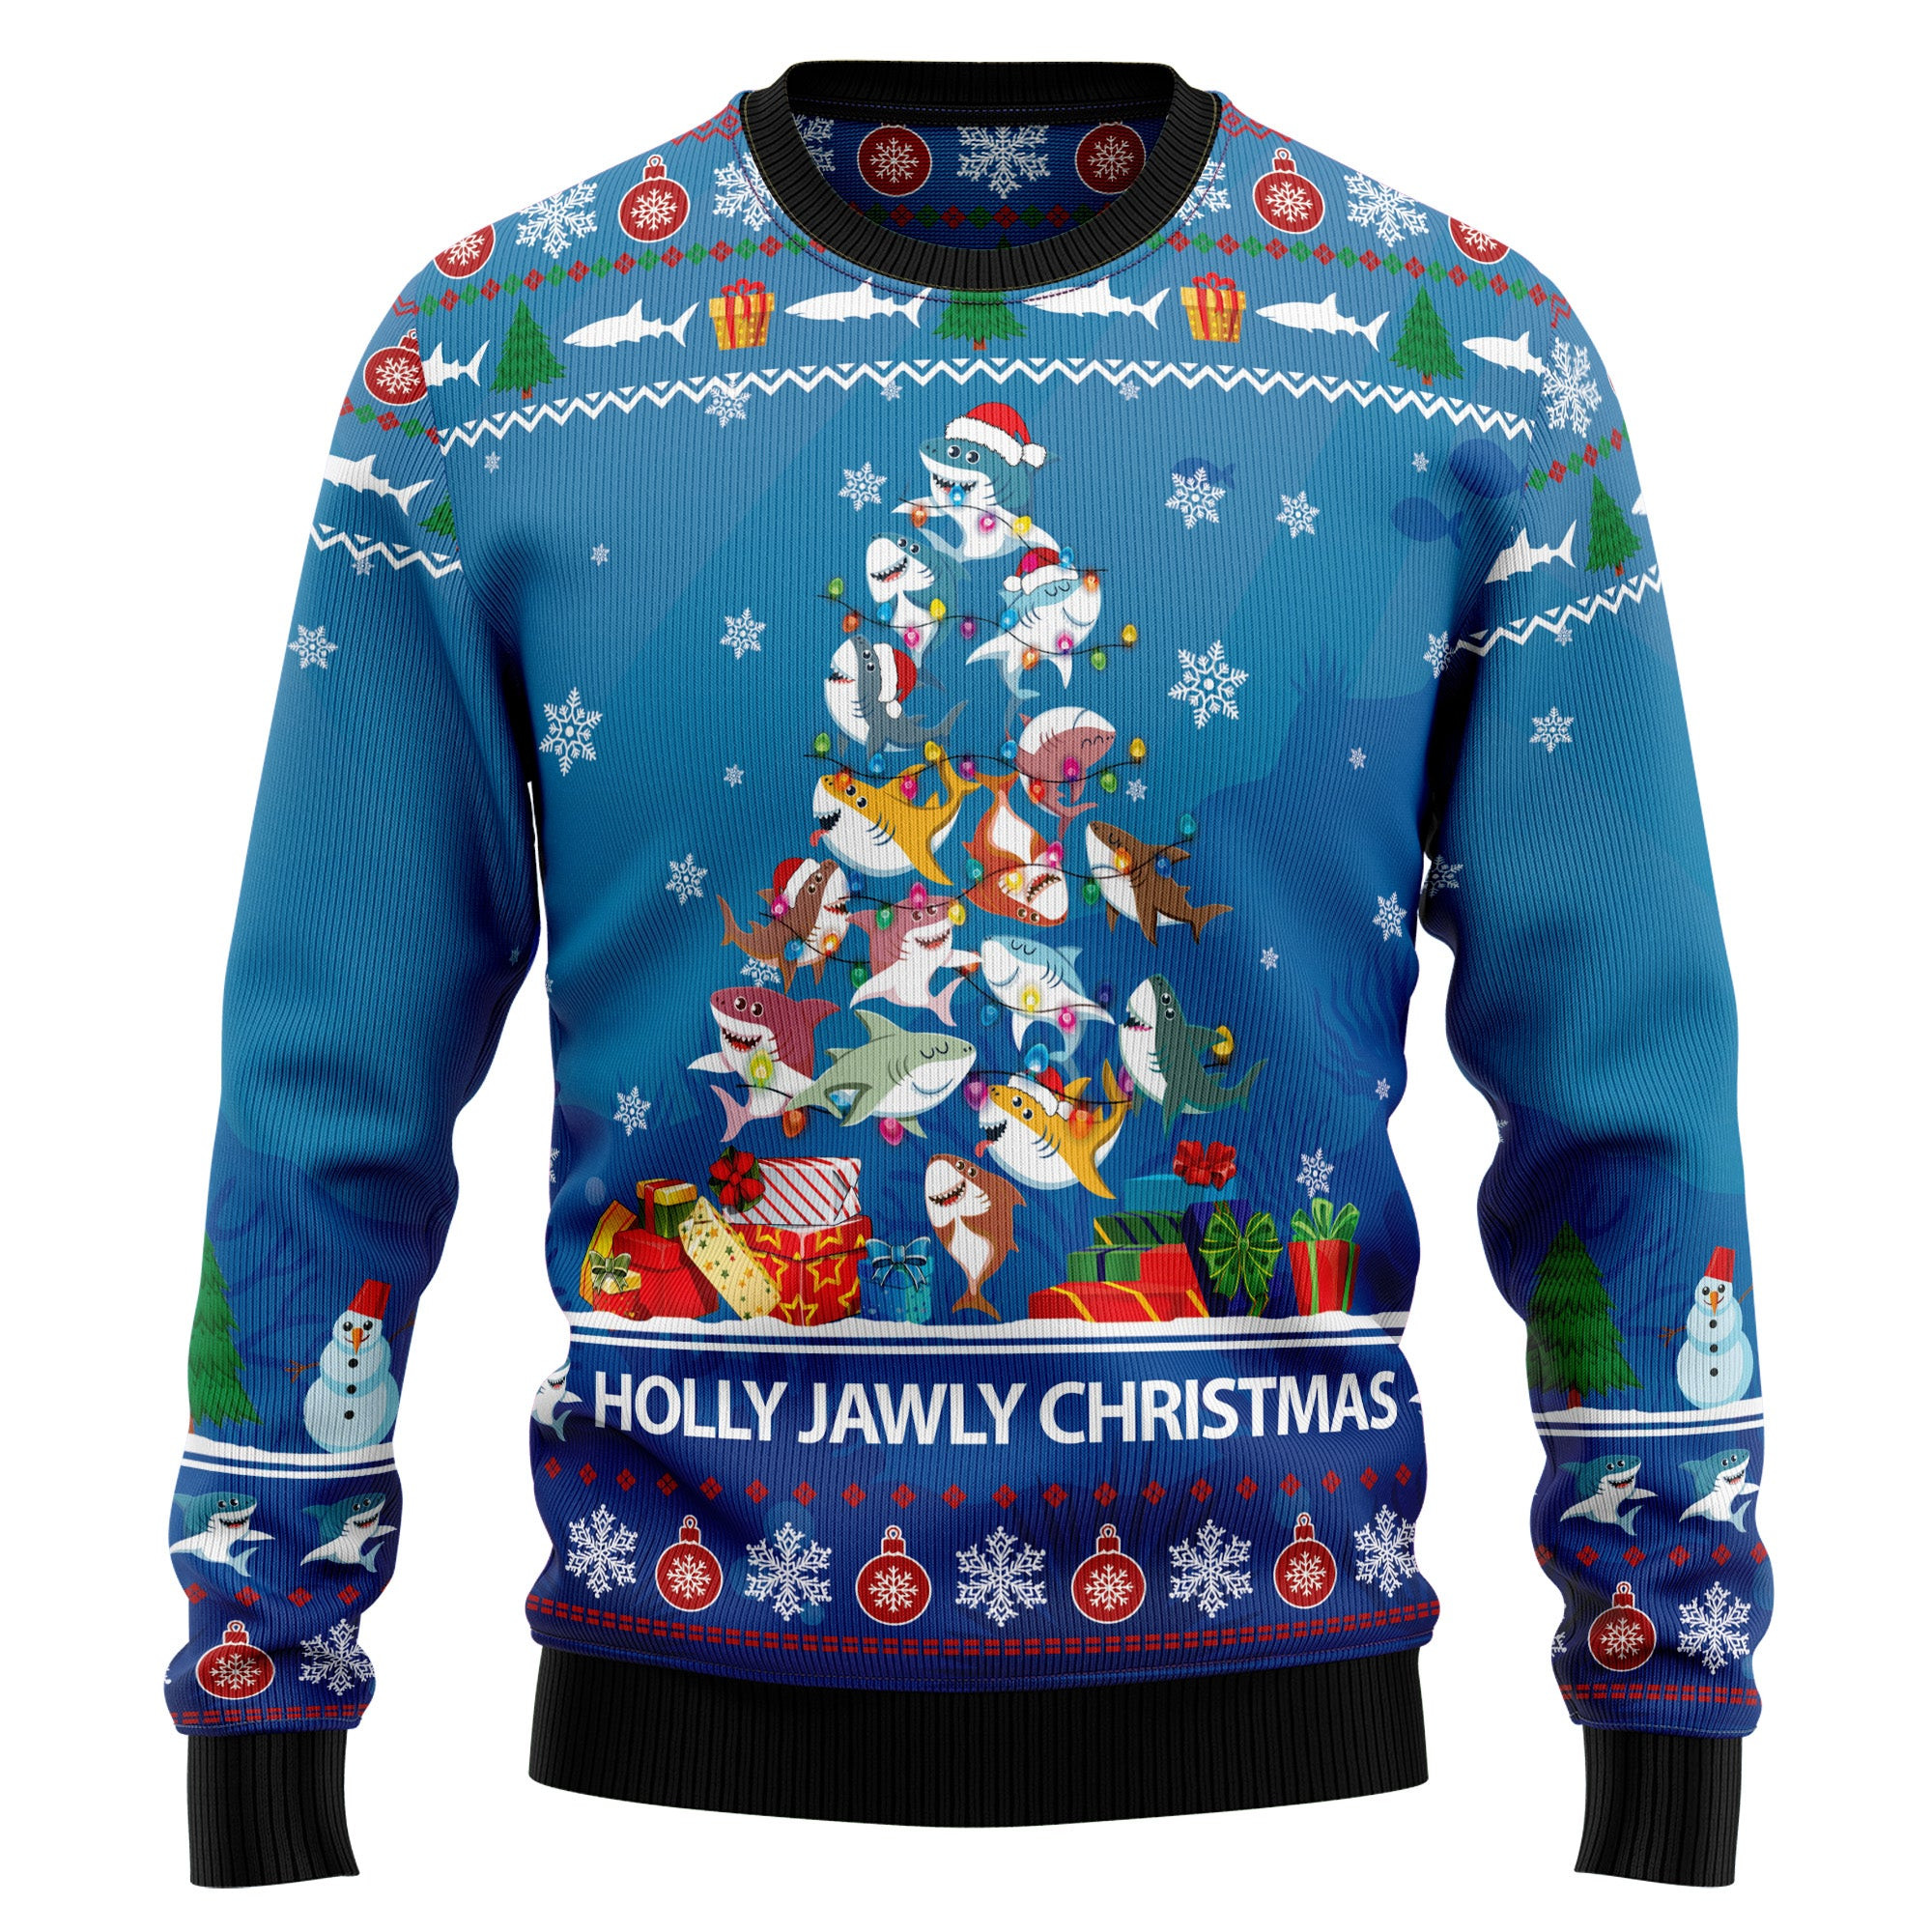 Shark Holly Jawly Christmas Ugly Christmas Sweater